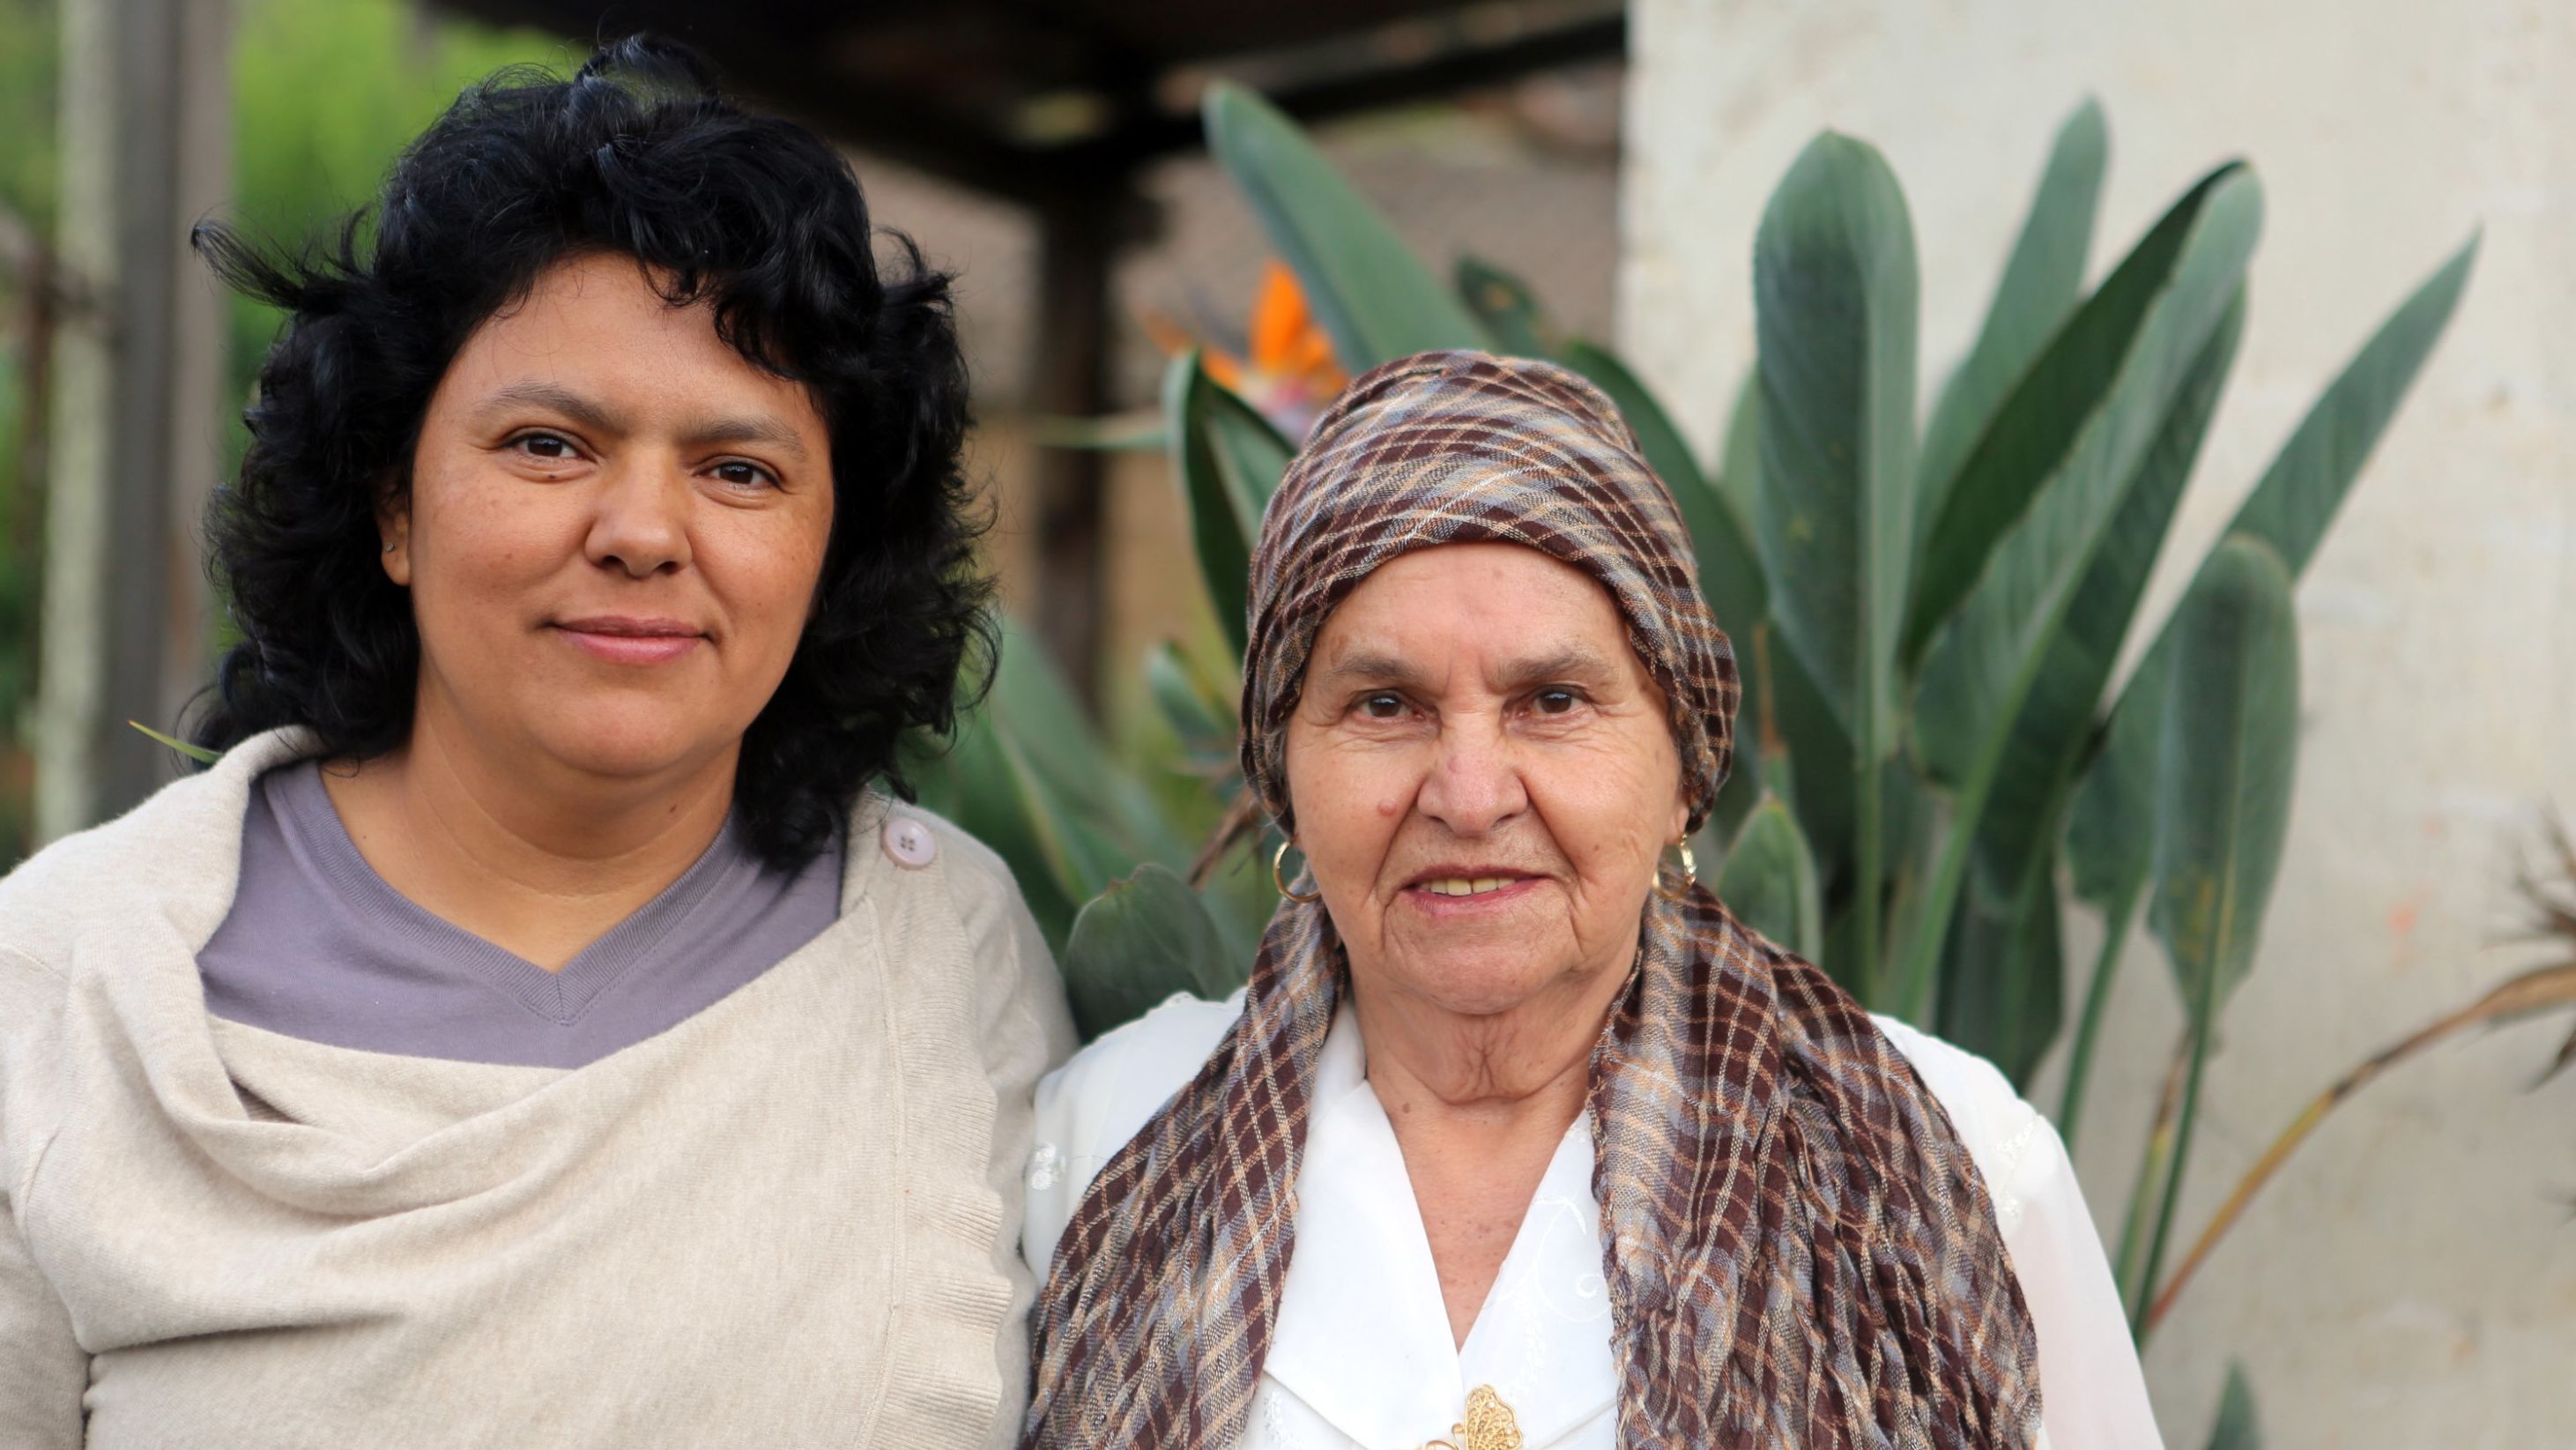 Berta Cáceres with her mother Doña Berta in their home in La Esperanza, Intibucá, Honduras.